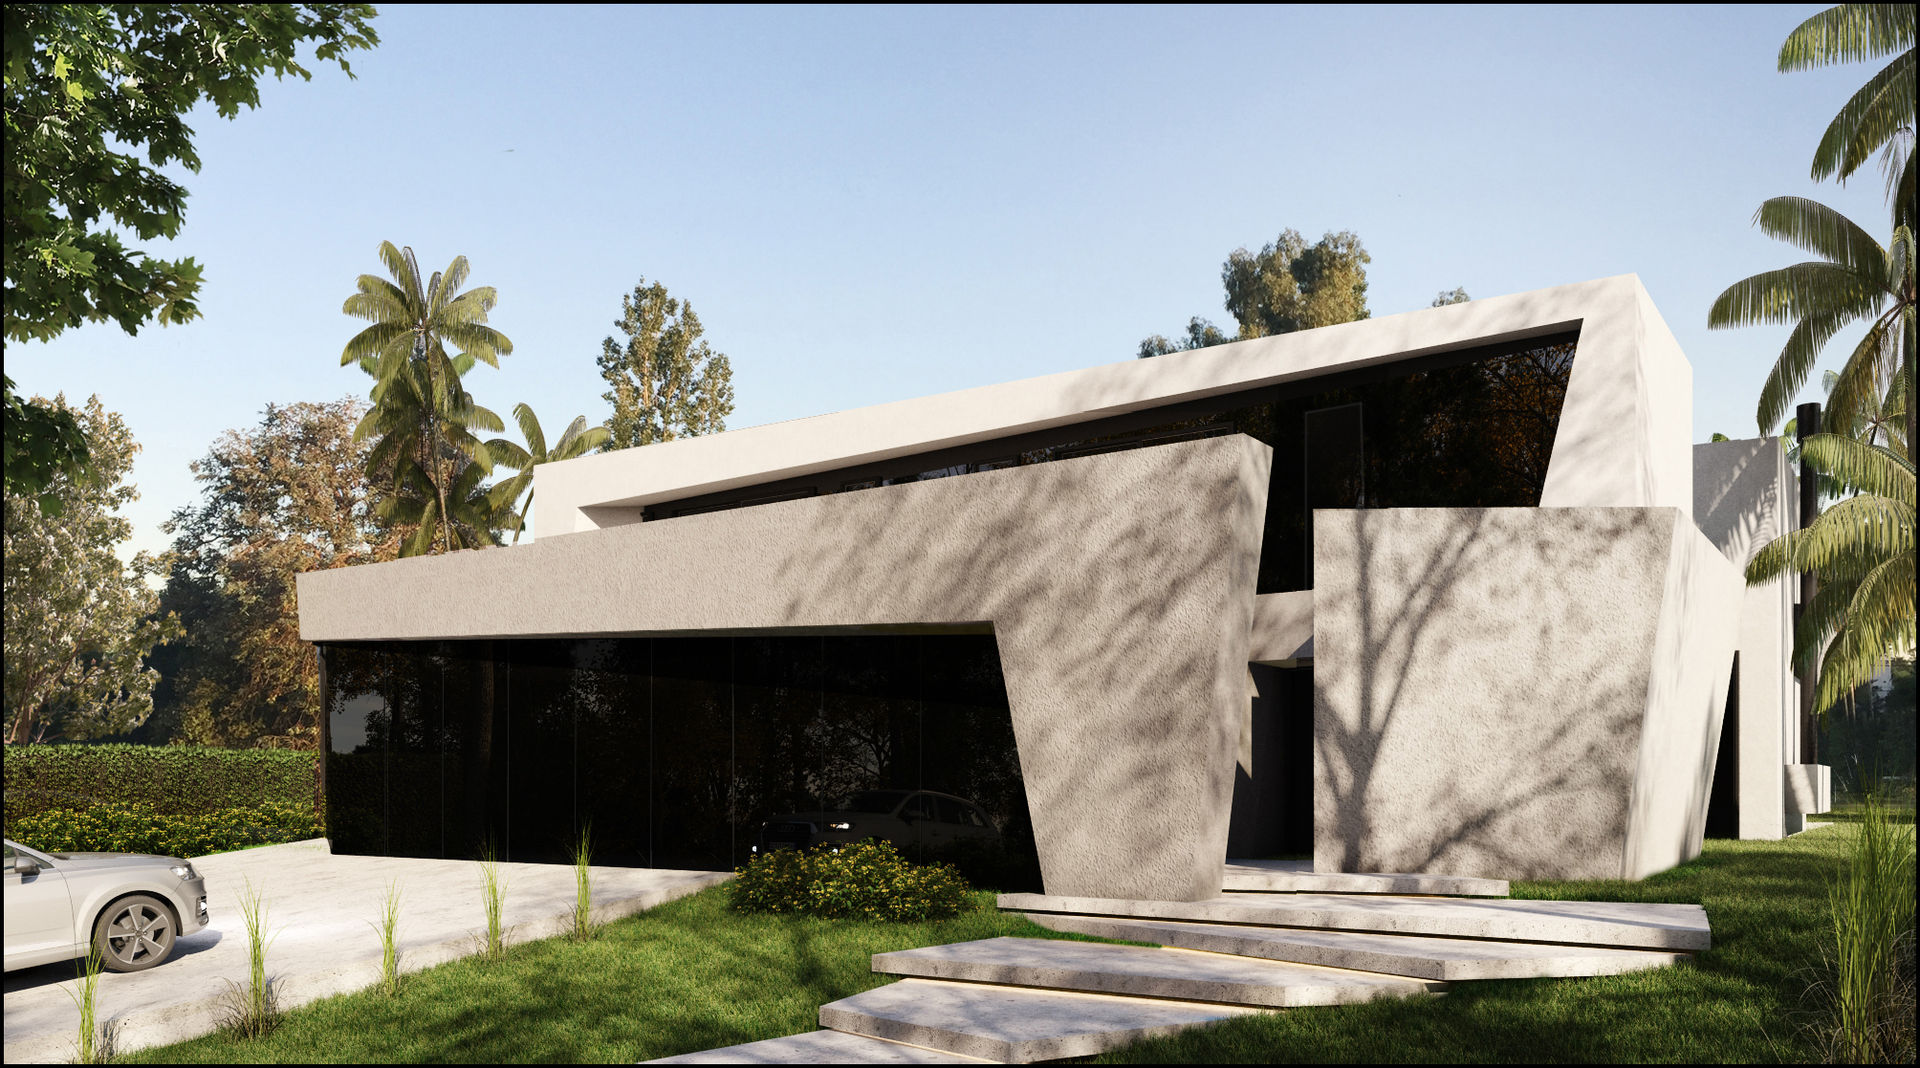 ESTILO MODERNO DE VANGUARDIA Maximiliano Lago Arquitectura - Estudio Azteca Casas modernas